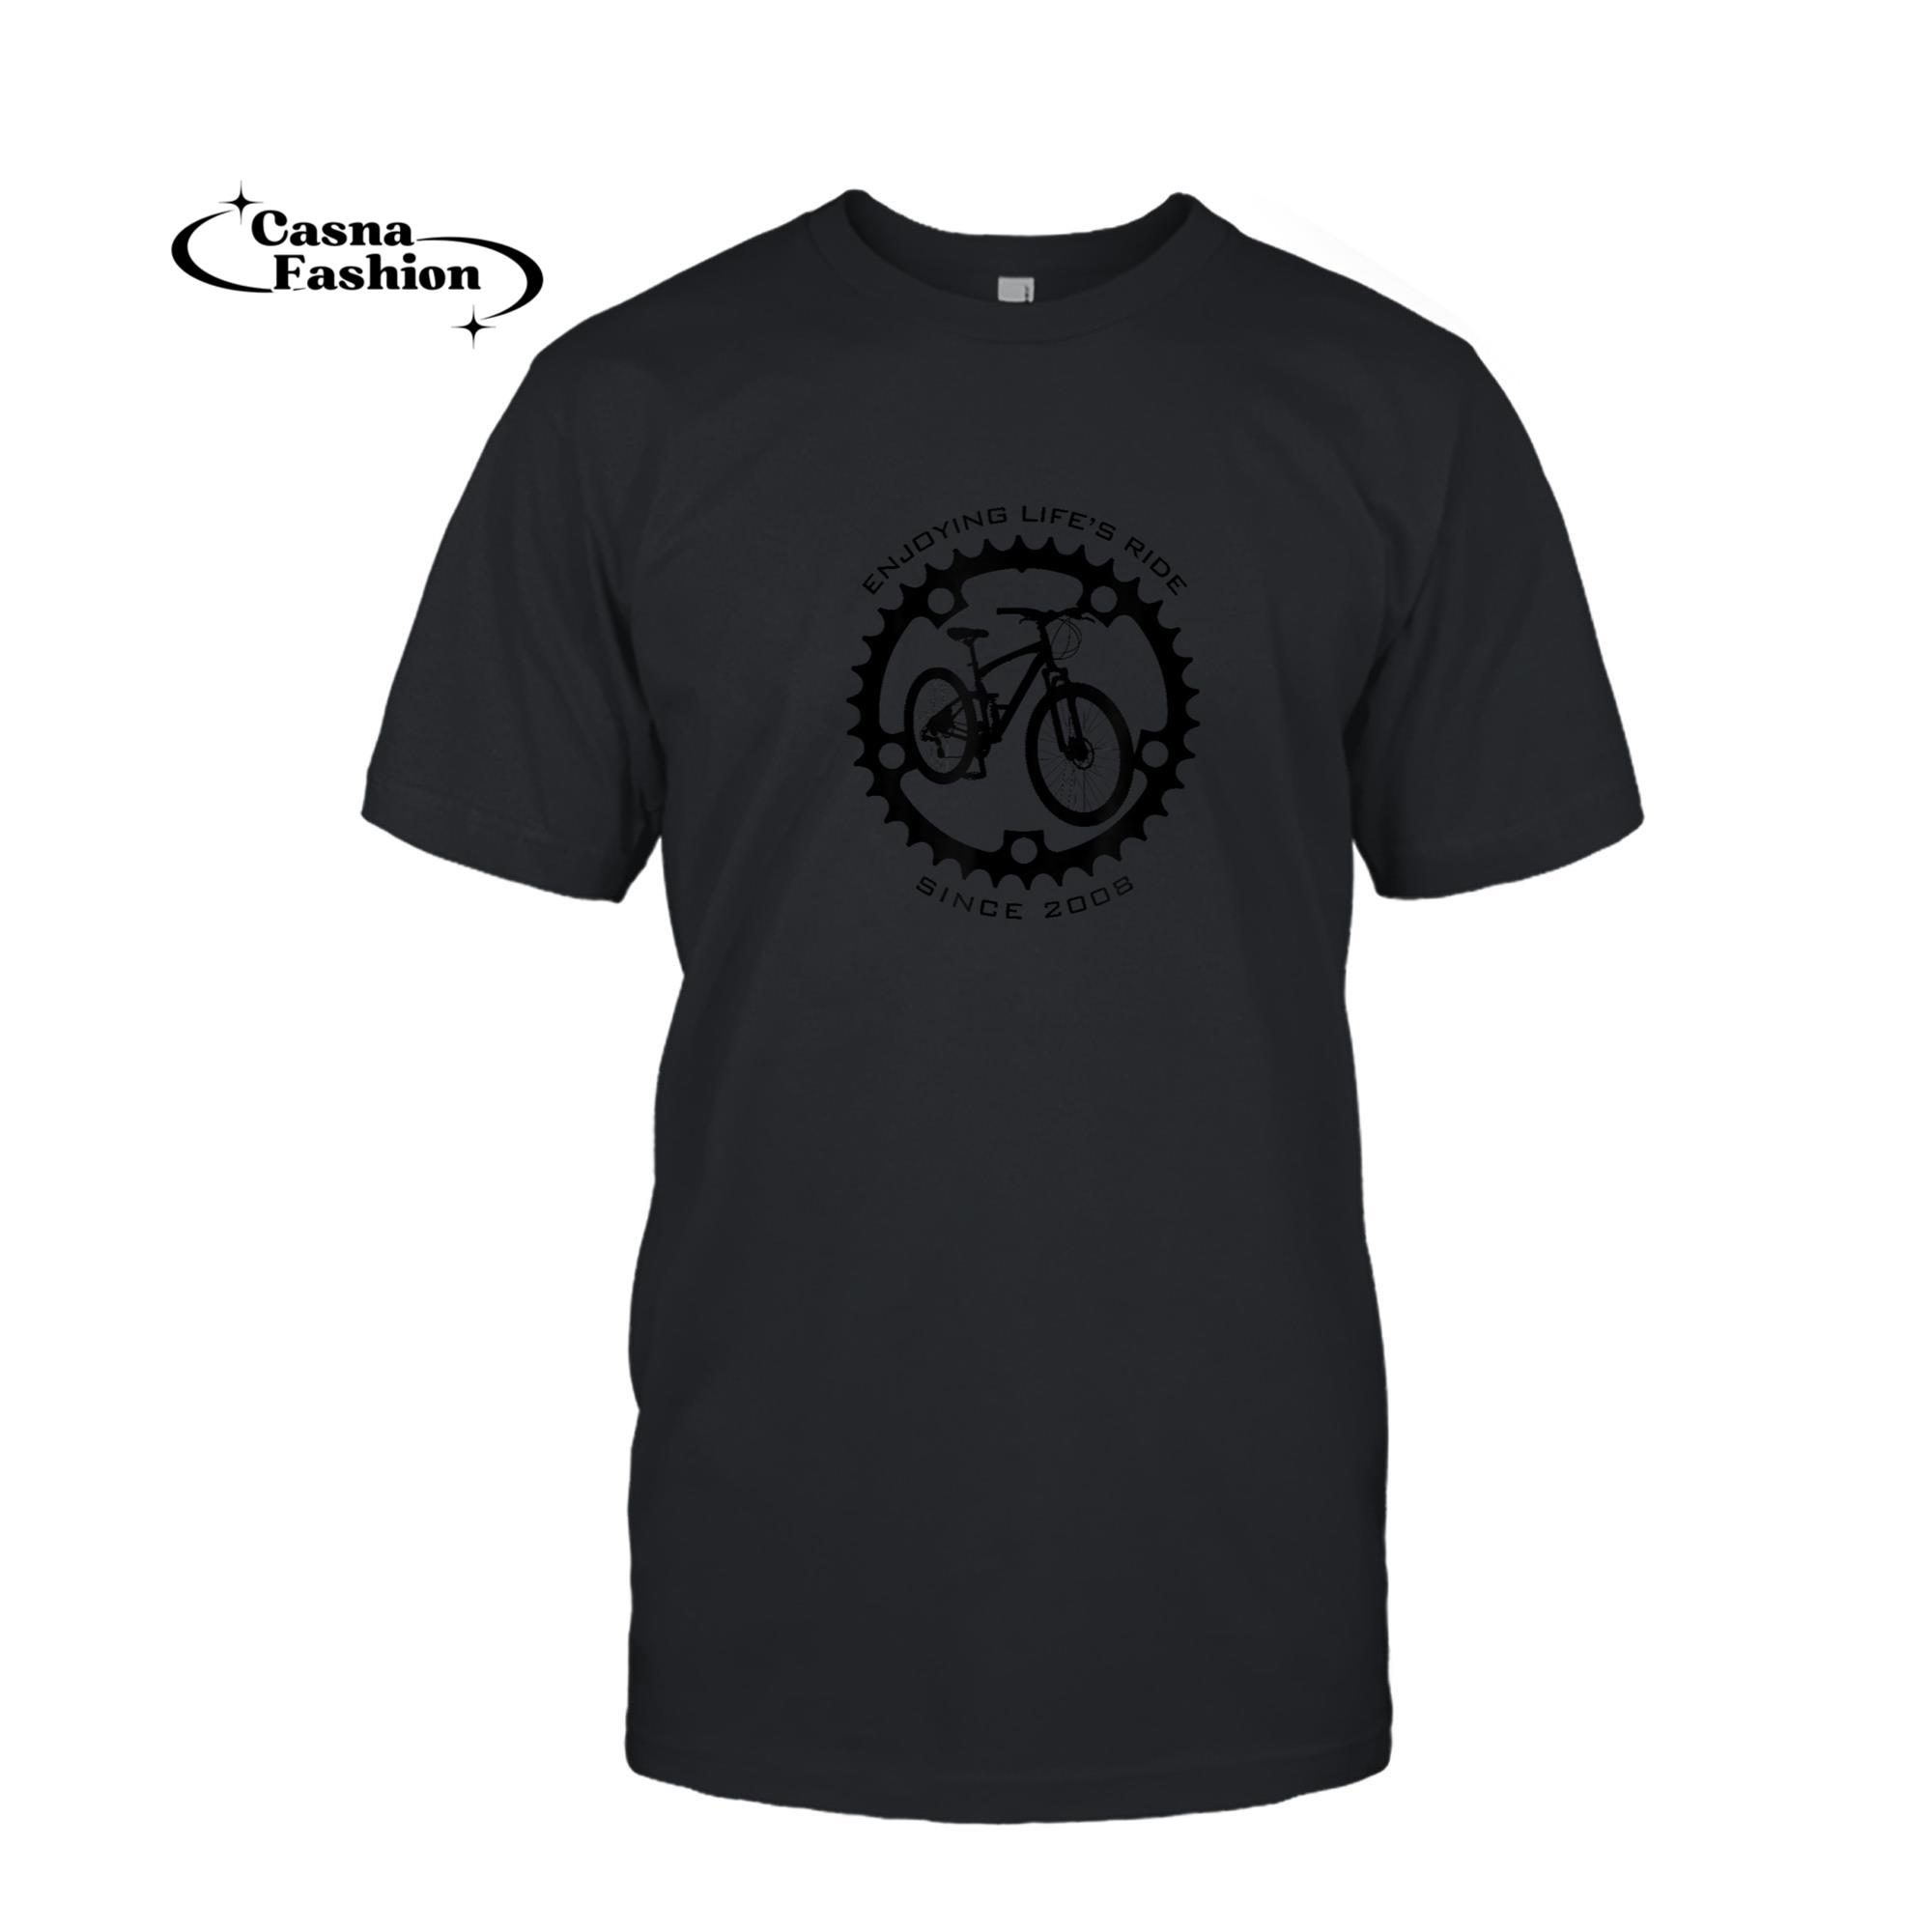 casnafashion_T-shirt_16 Year Old Mountain Biker Biking Cycling 2008 16th Birthday T-Shirt_T-shirt_Black